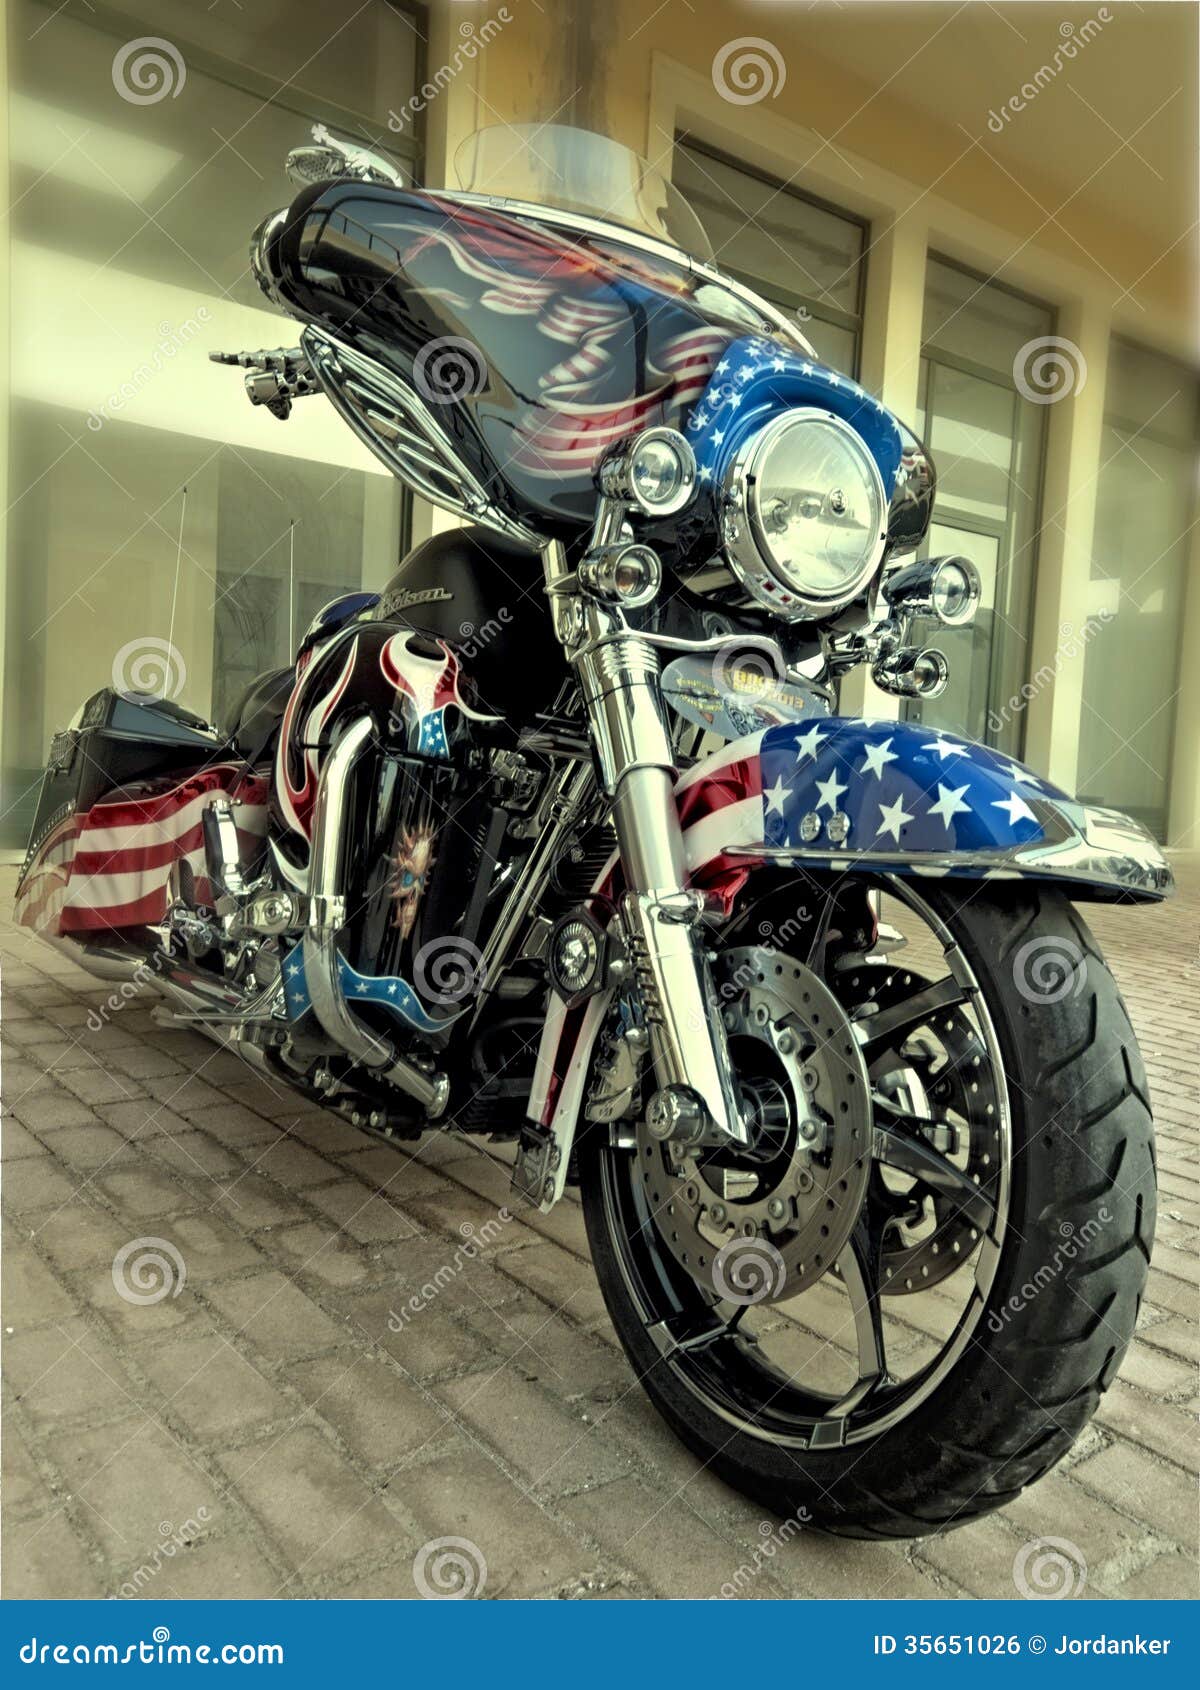 HarleyDavidson Motorcycles